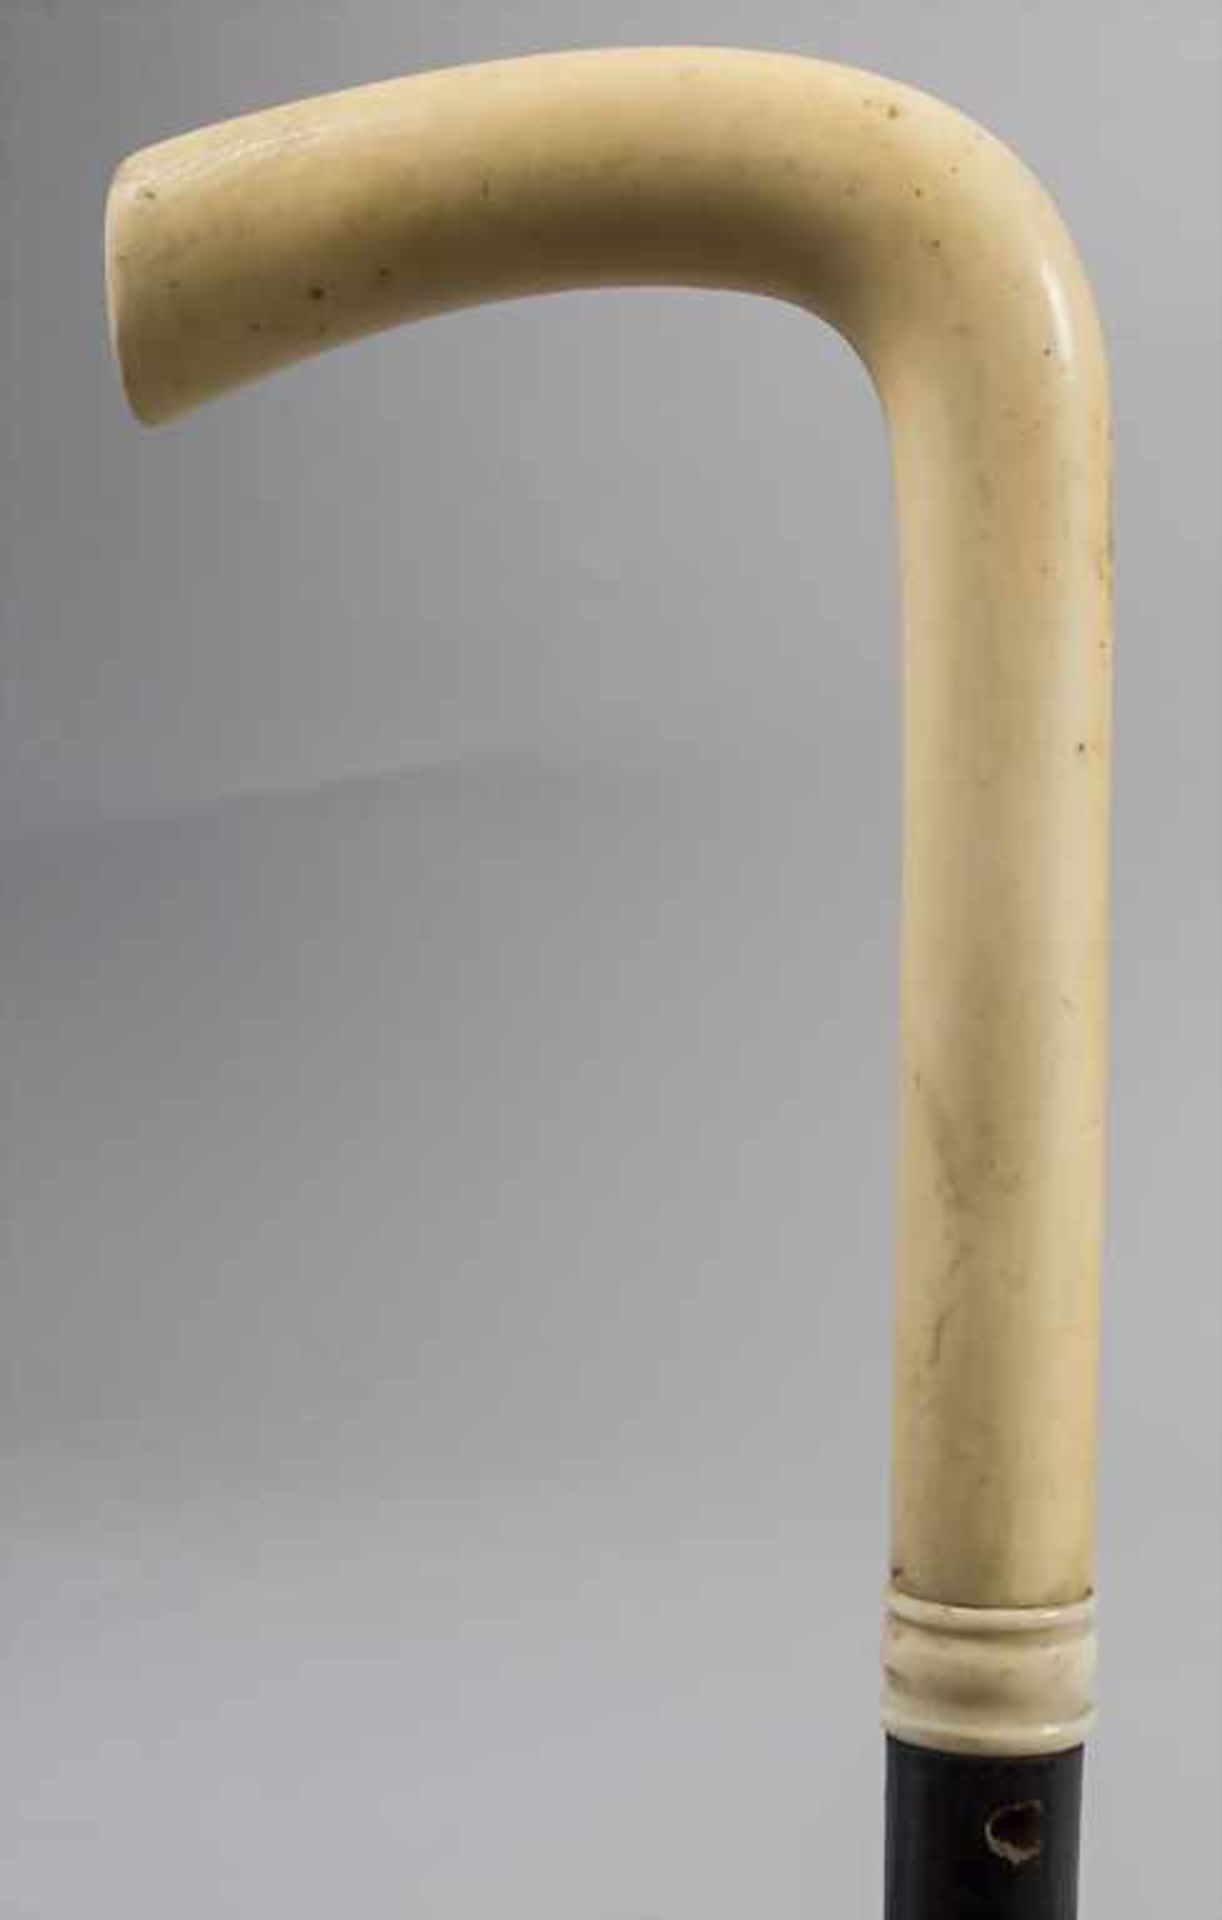 Sammlung 10 Gehstöcke / A collection of 10 canes with ivory handle - Bild 8 aus 27